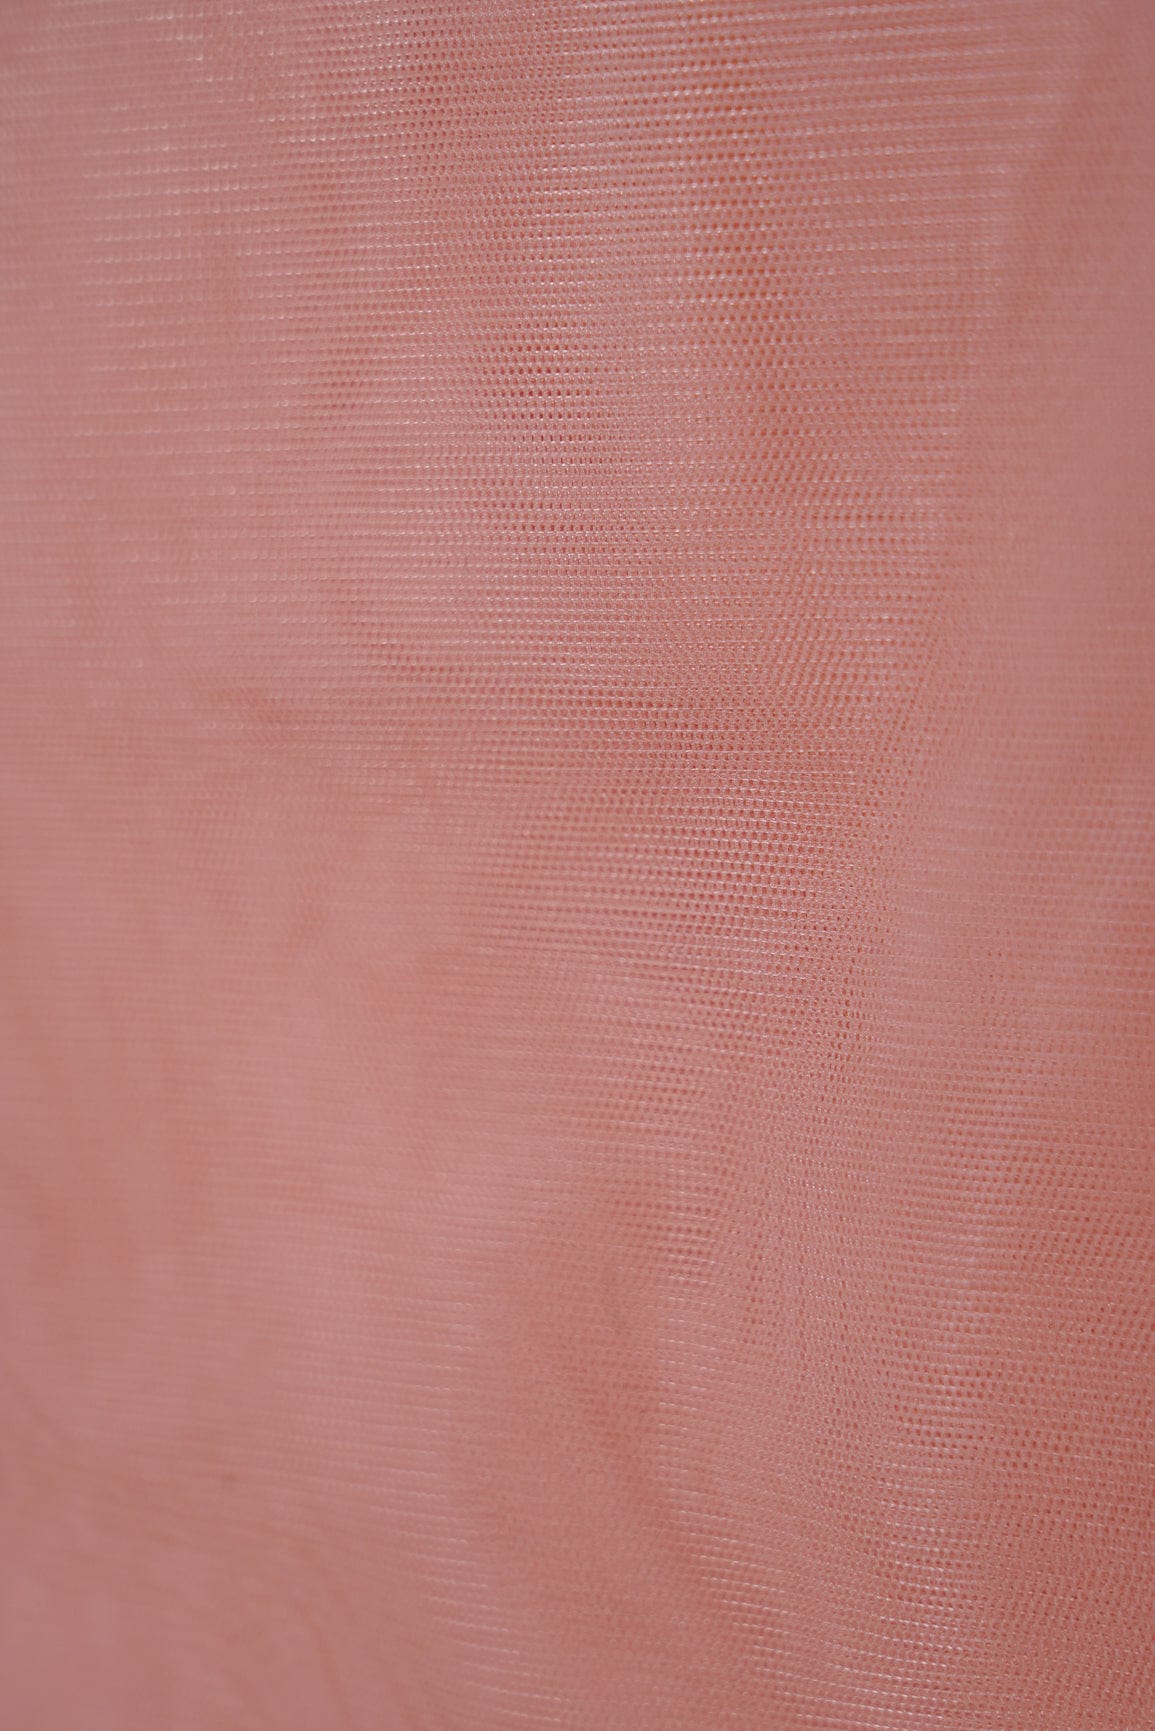 doeraa Plain Fabrics Peach Dyed Soft Net